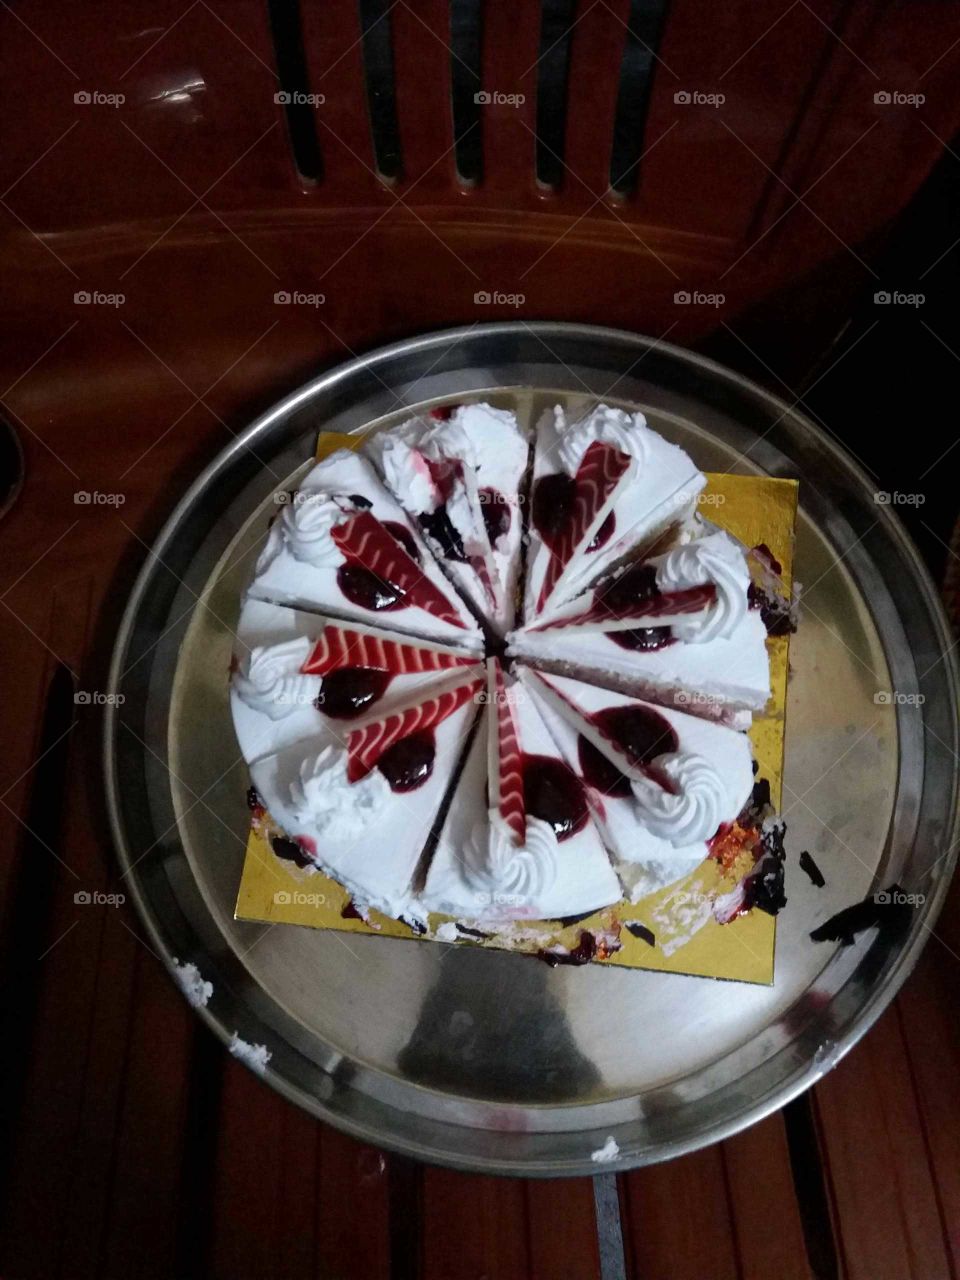 Birthday party cake